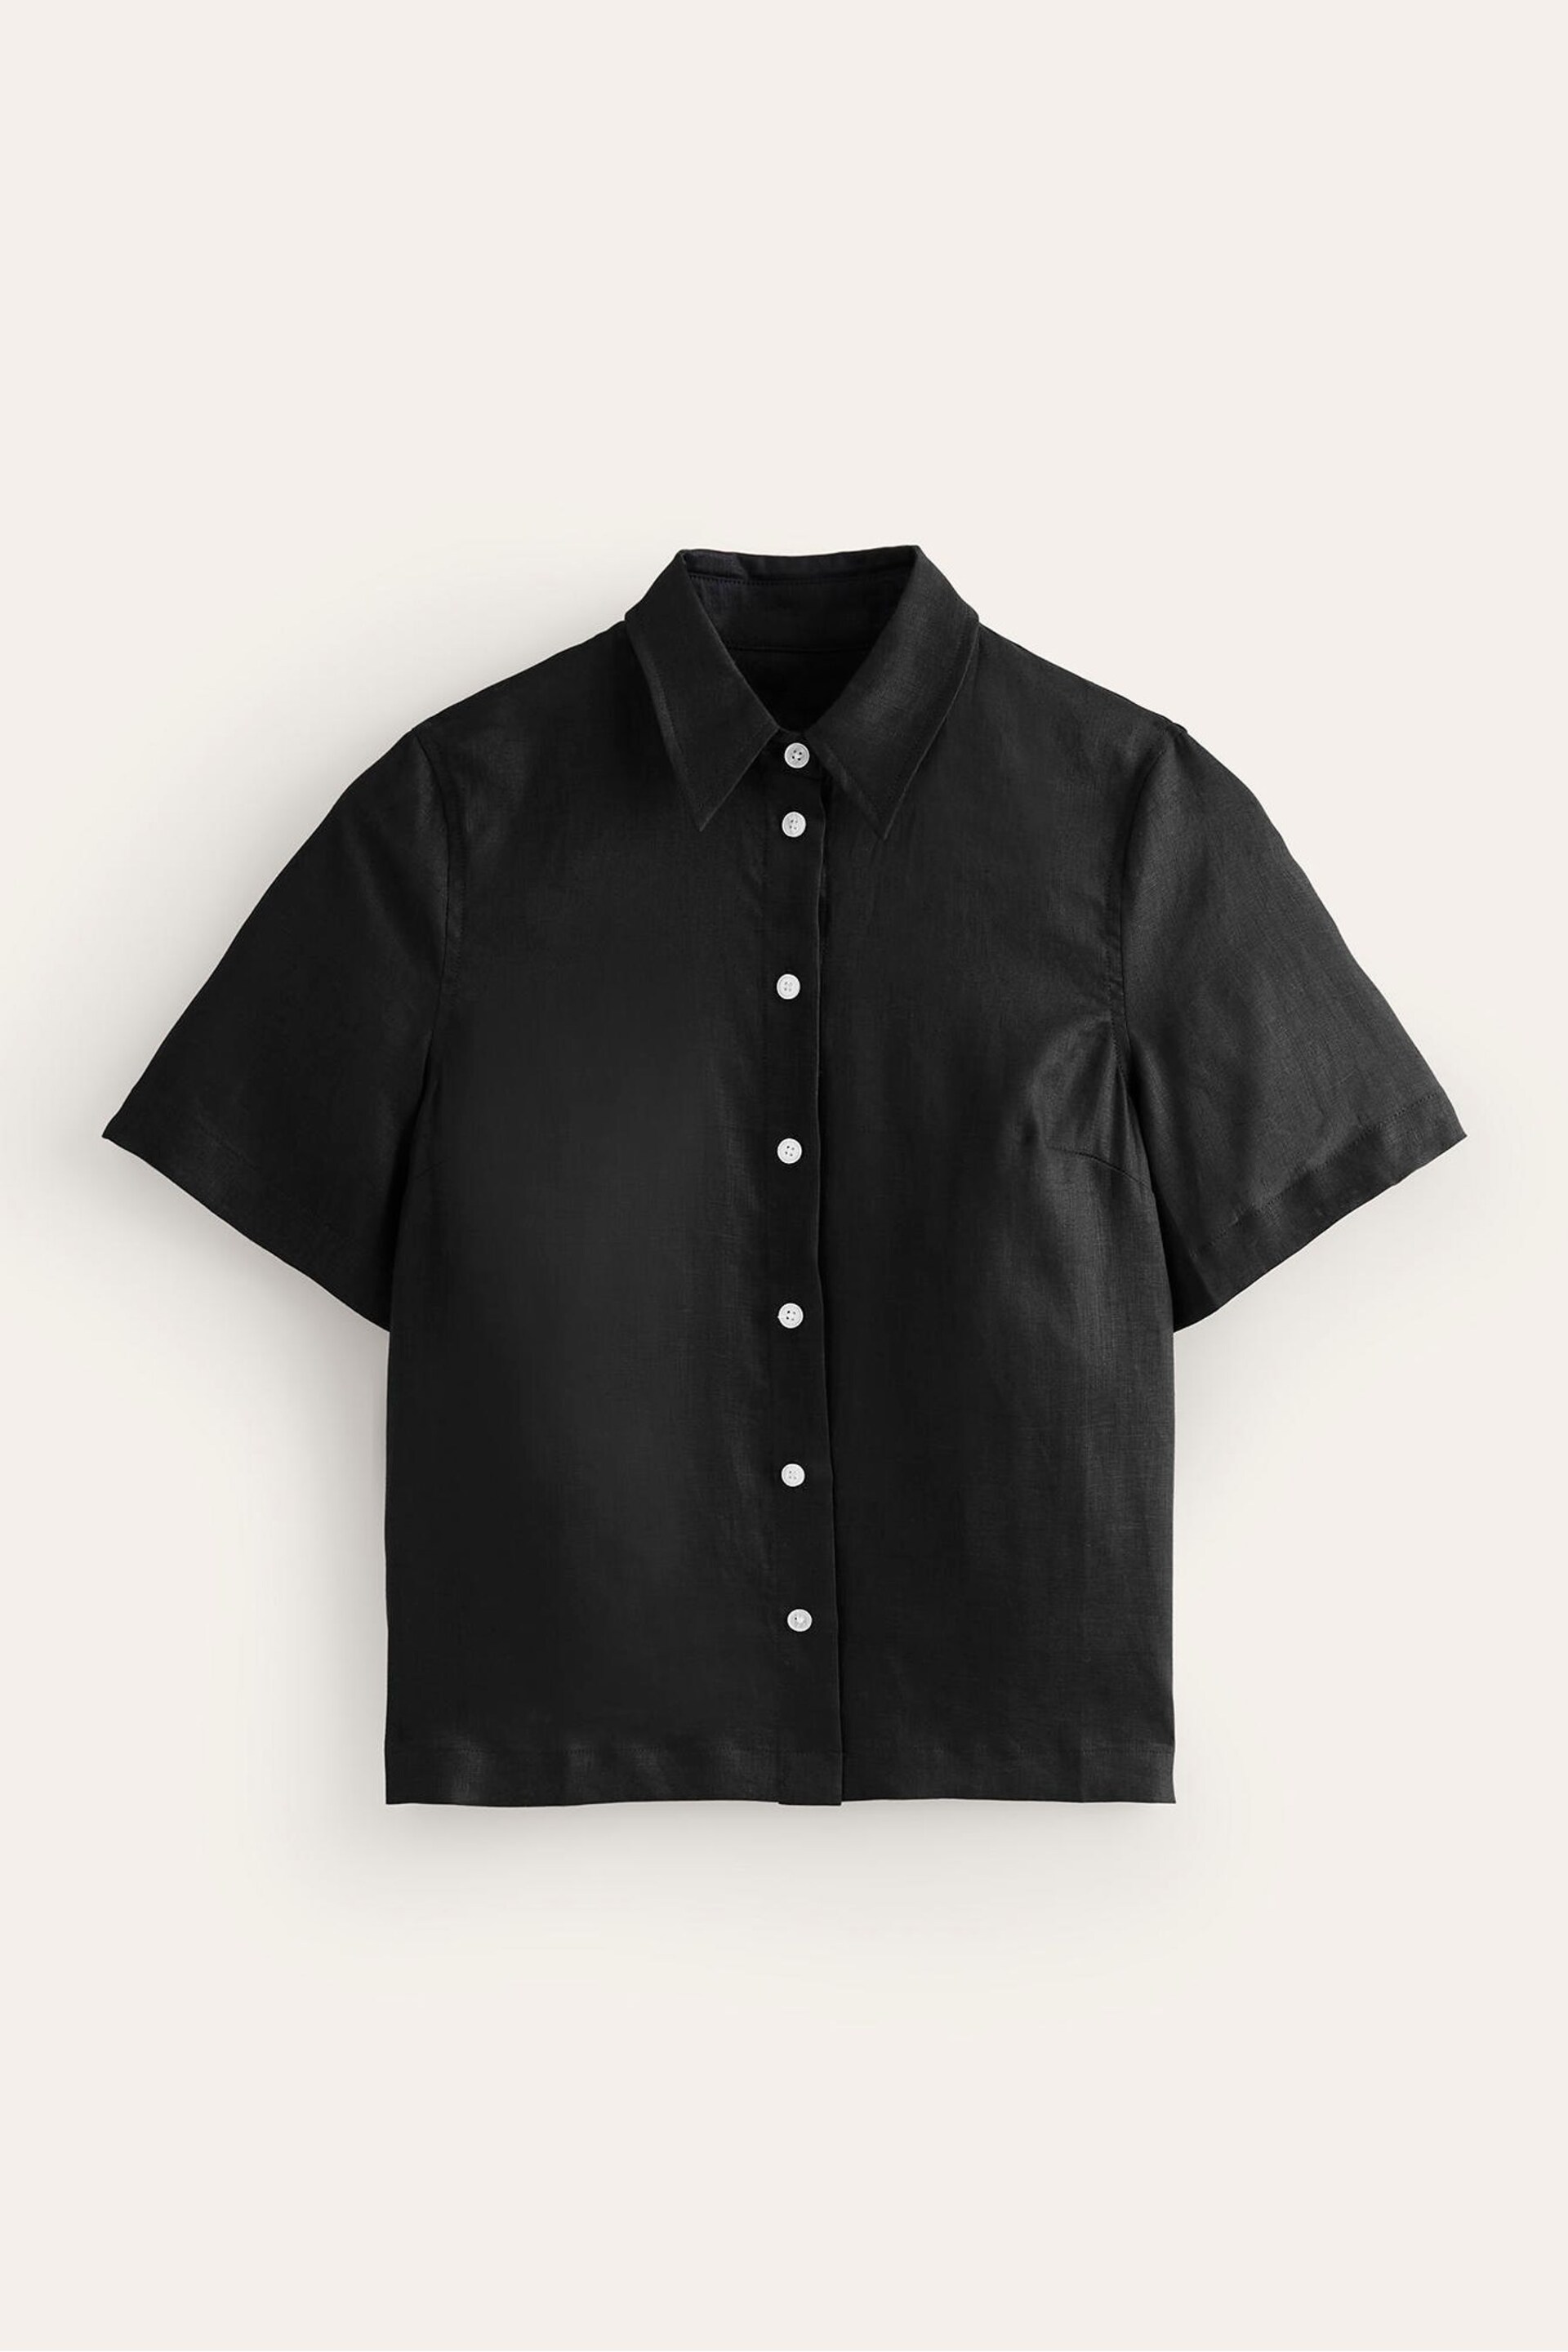 Boden Black Hazel Short Sleeve Linen Shirt - Image 5 of 5